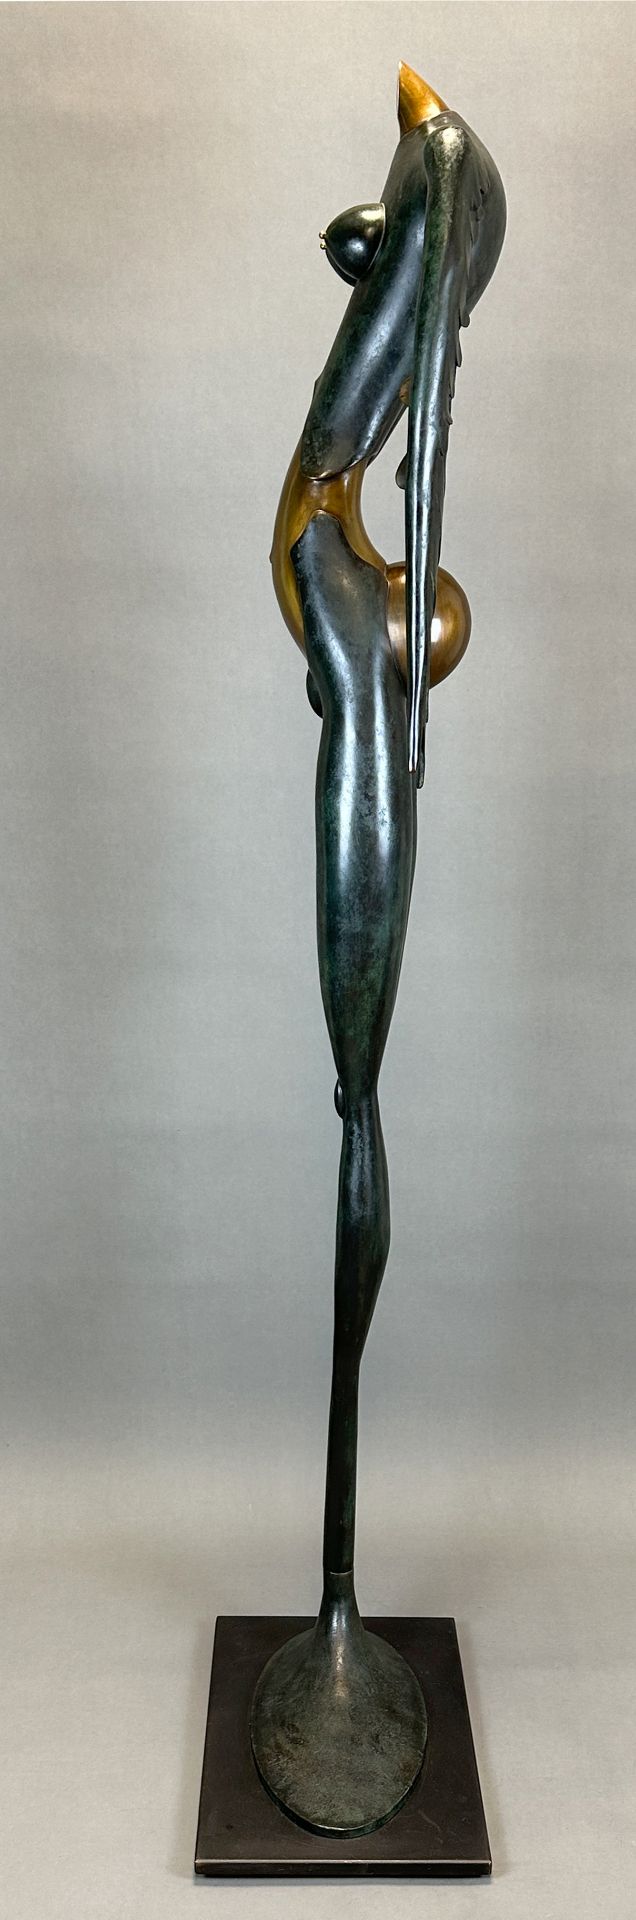 Paul WUNDERLICH (1927 - 2010). Bronze. "Large Nike". - Image 2 of 10